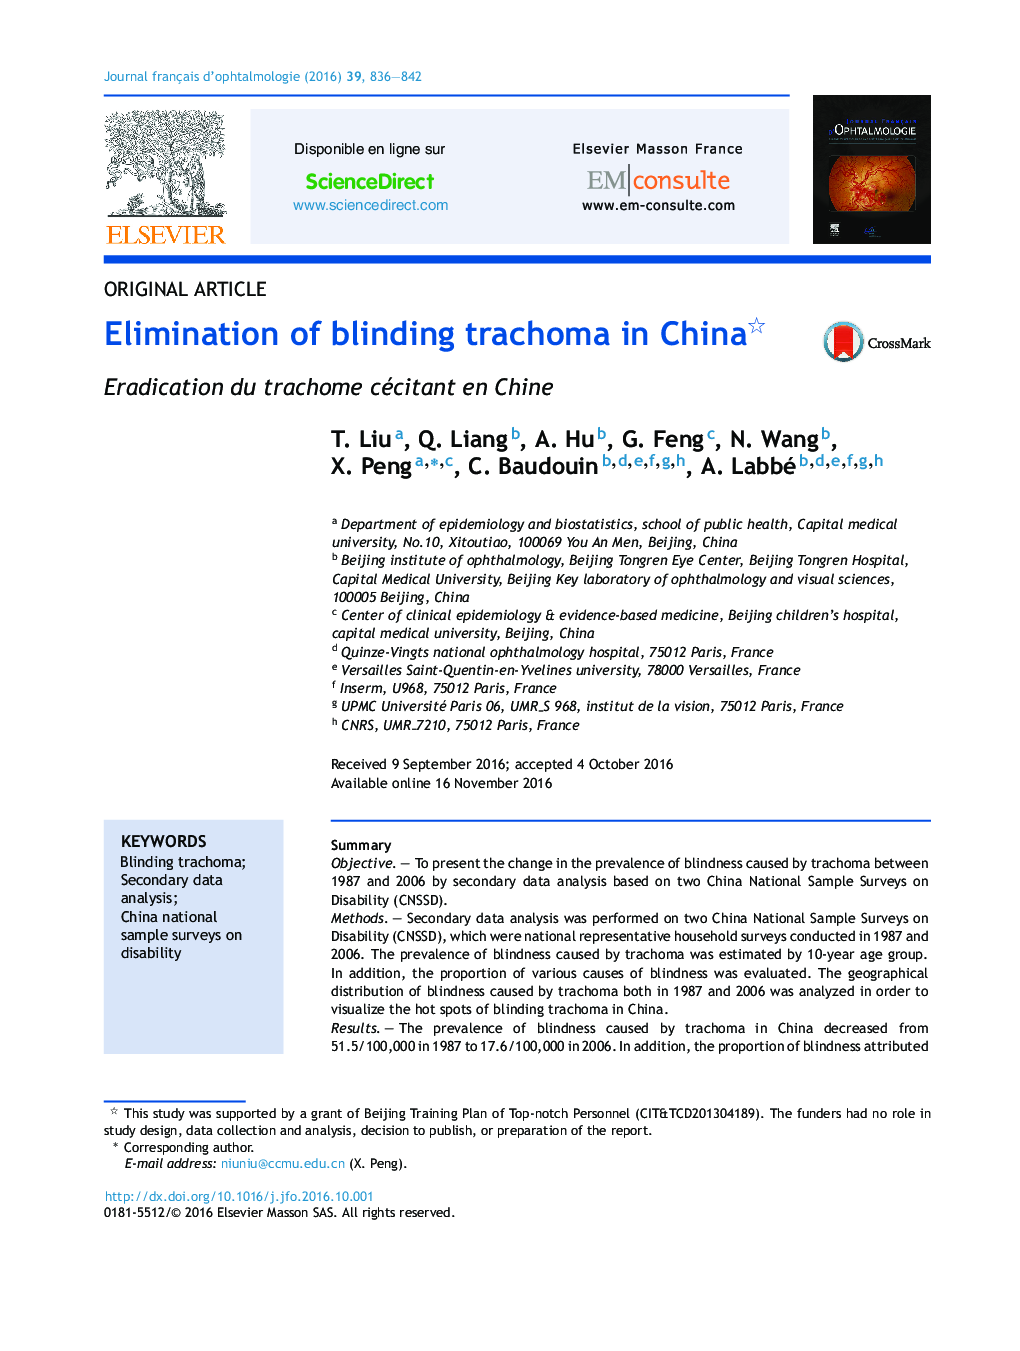 Elimination of blinding trachoma in China